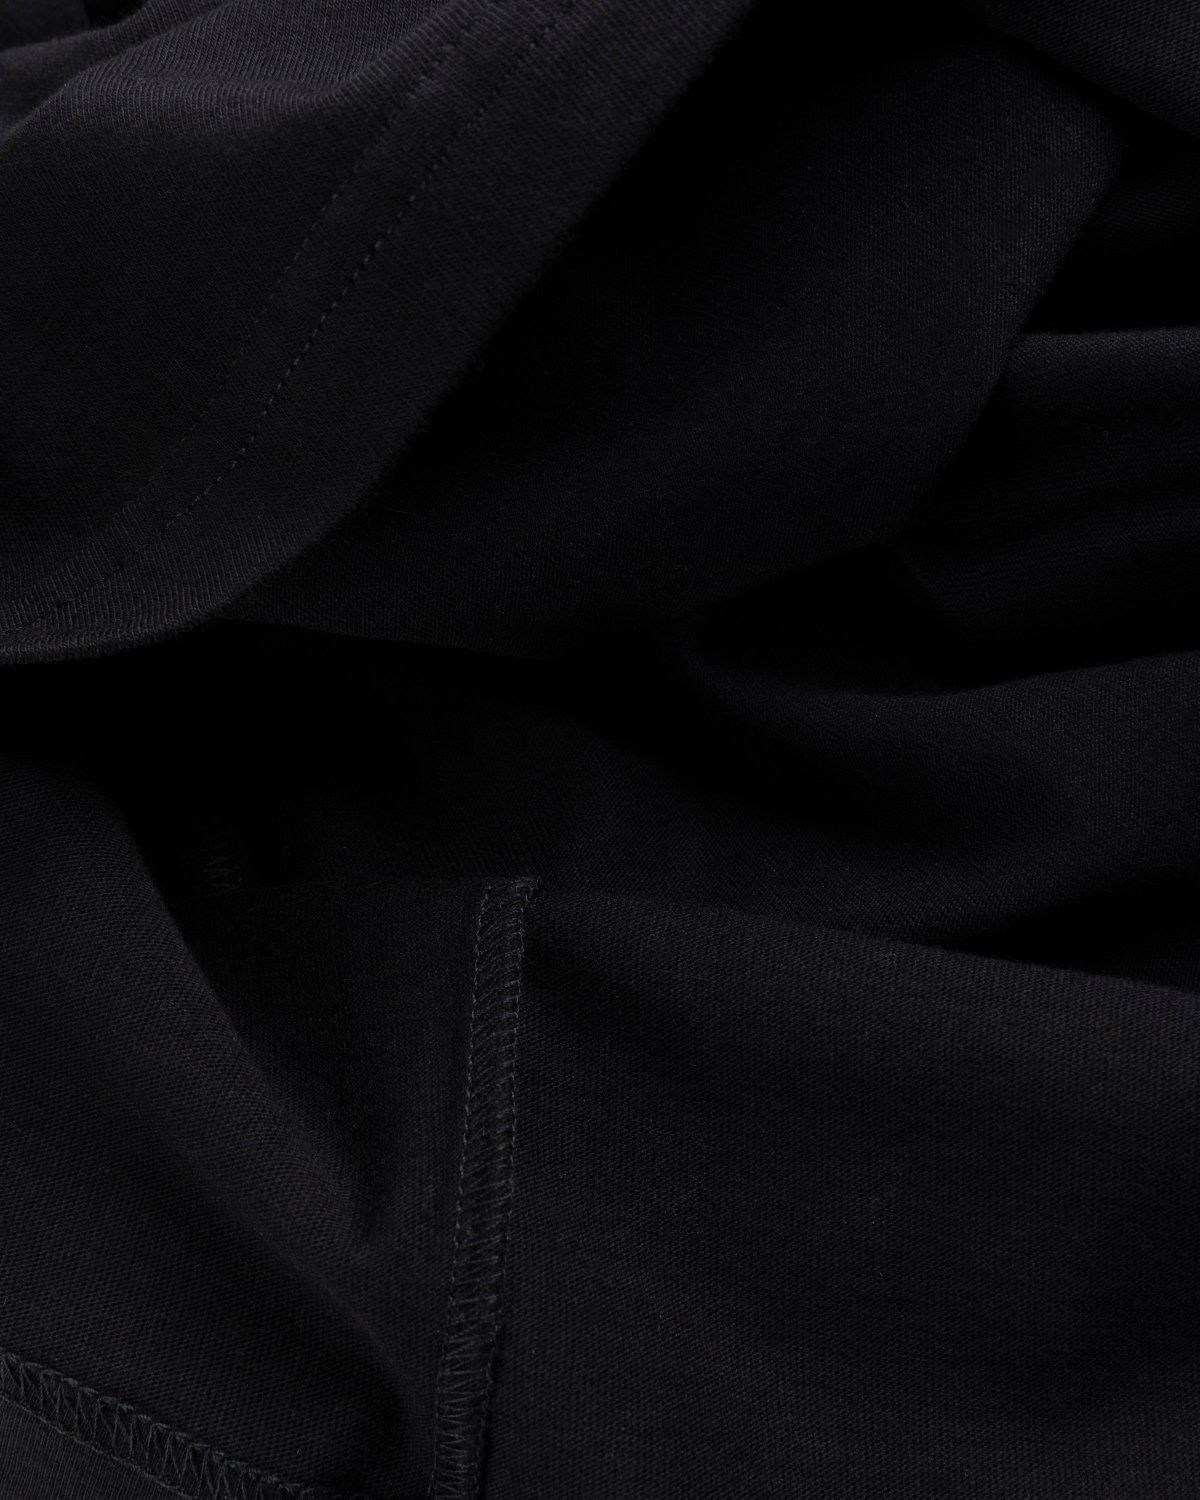 Carhartt WIP – Meatloaf T-Shirt Black - Tops - Black - Image 5